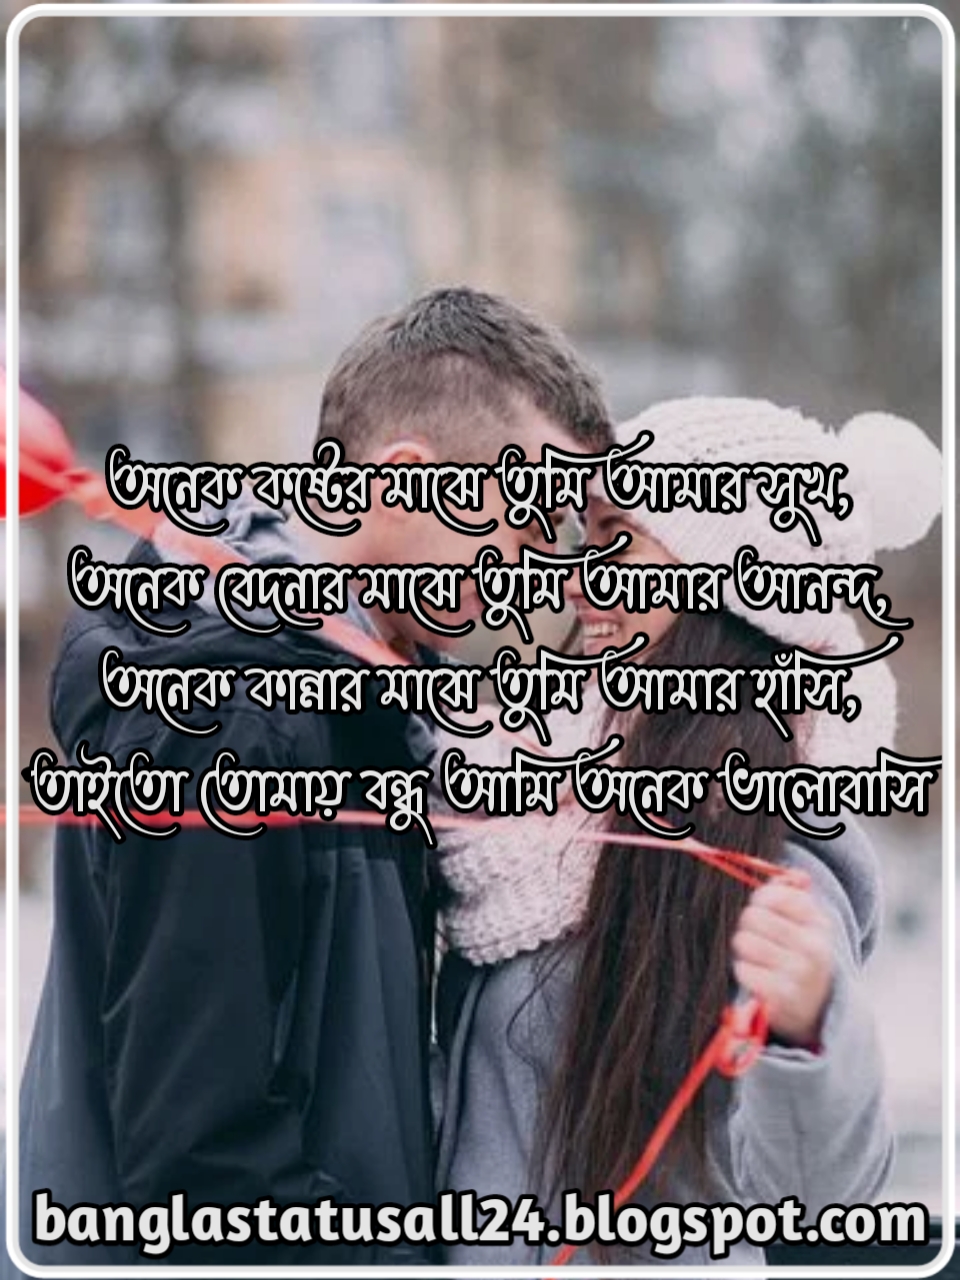 1. Bangla Love Sms, Bangla quotes Pic, Love status bangla, Love caption, Facebook caption bangla, bangla chondo pic, ছন্দ লেখা পিক, প্রেমের ছন্দ, Bangla Status Picture